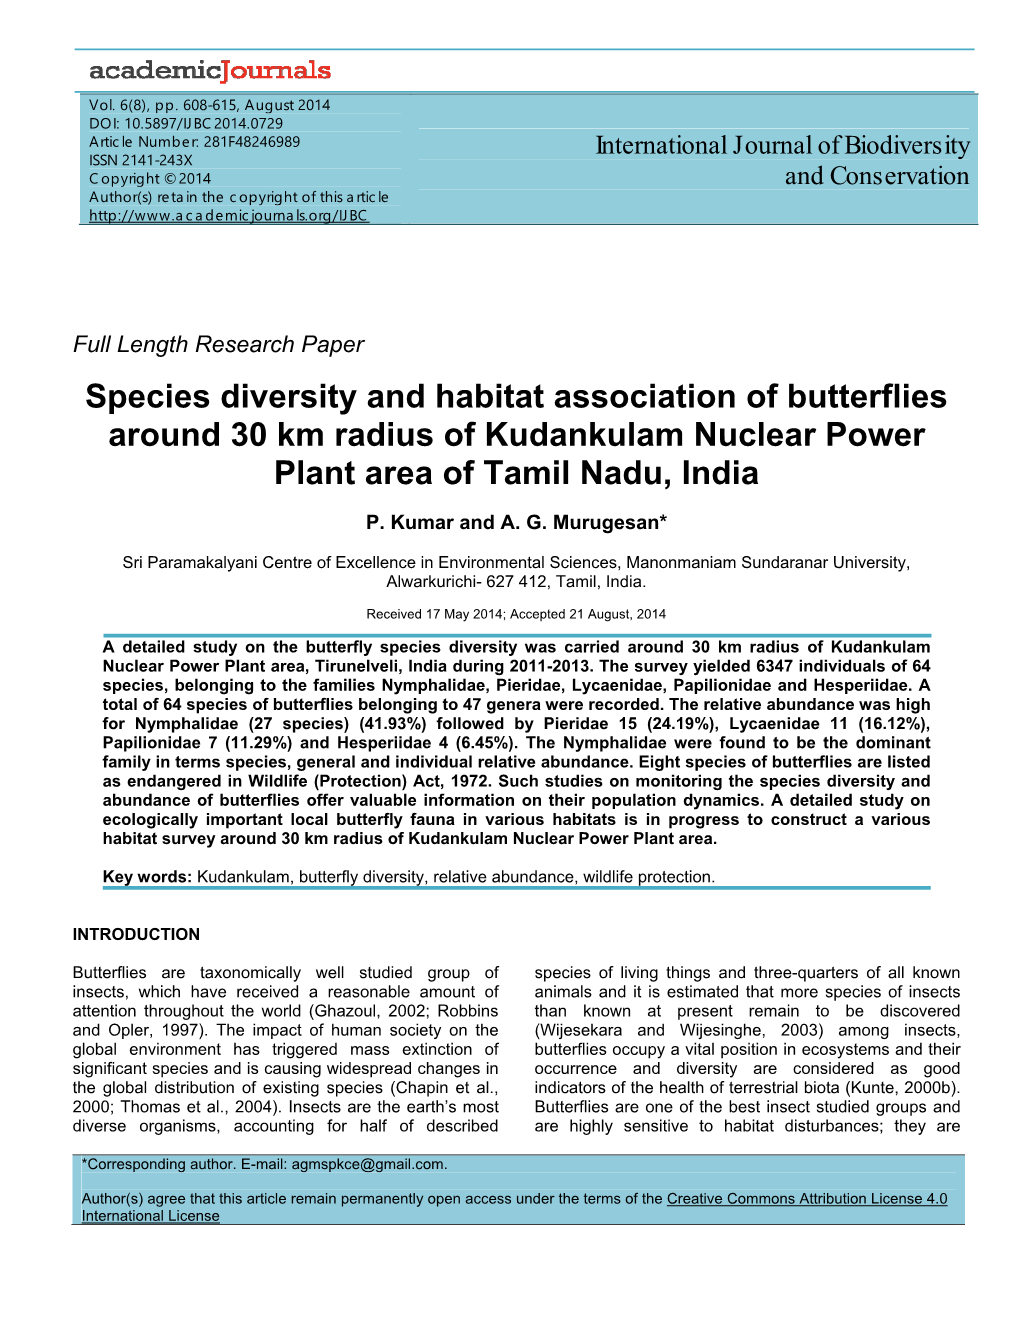 Species Diversity and Habitat Association of Butterflies Around 30 Km Radius of Kudankulam Nuclear Power Plant Area of Tamil Nadu, India